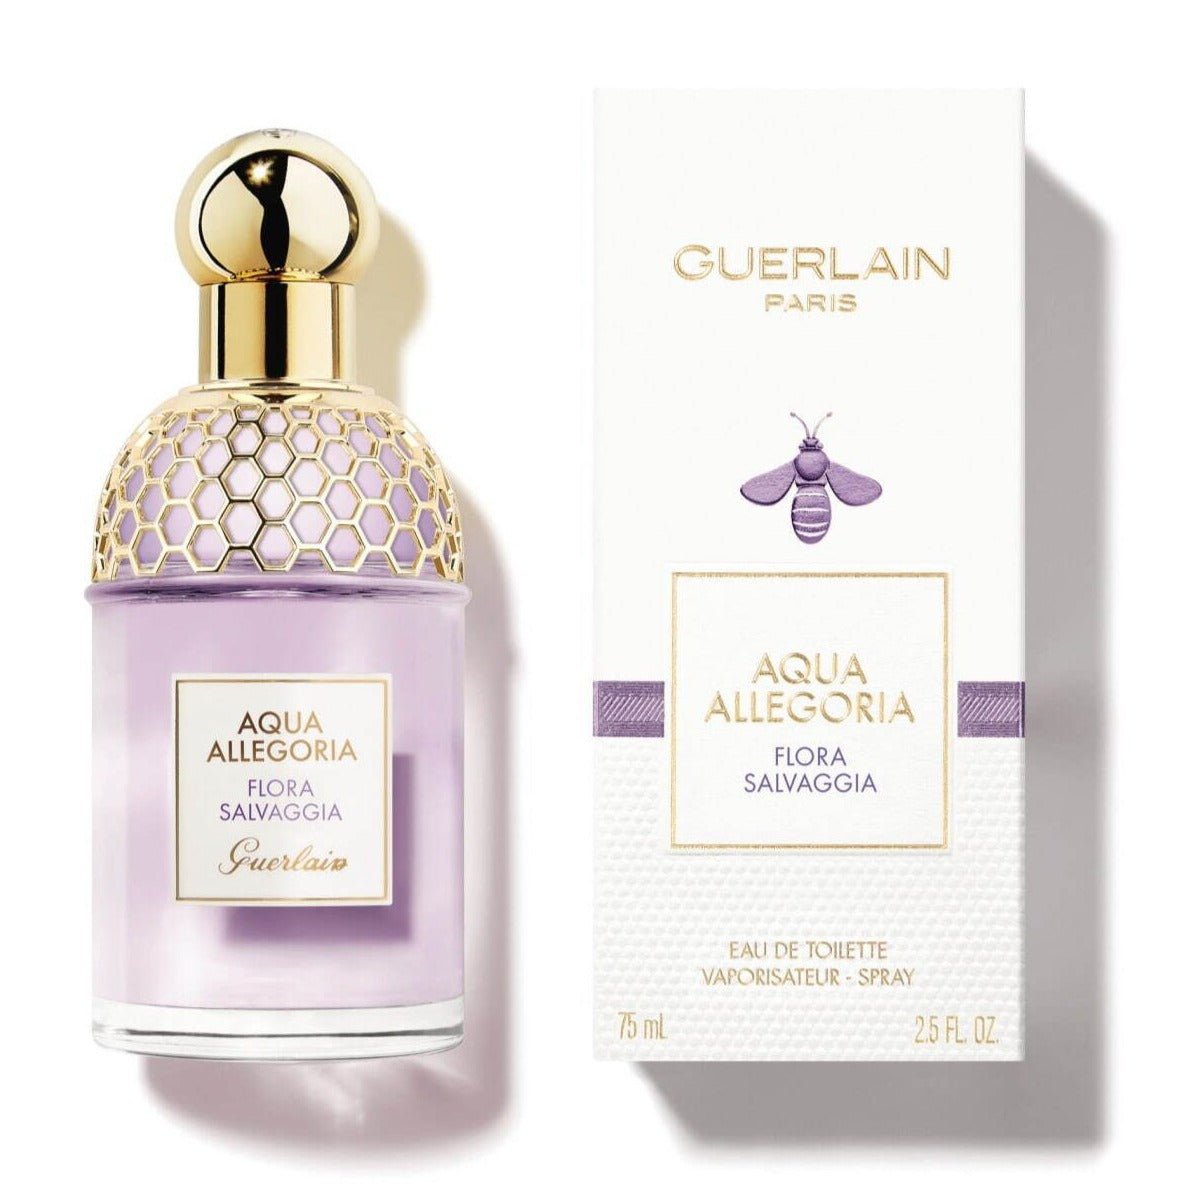 Guerlain Aqua Allegoria Flora Salvaggia EDT | My Perfume Shop Australia